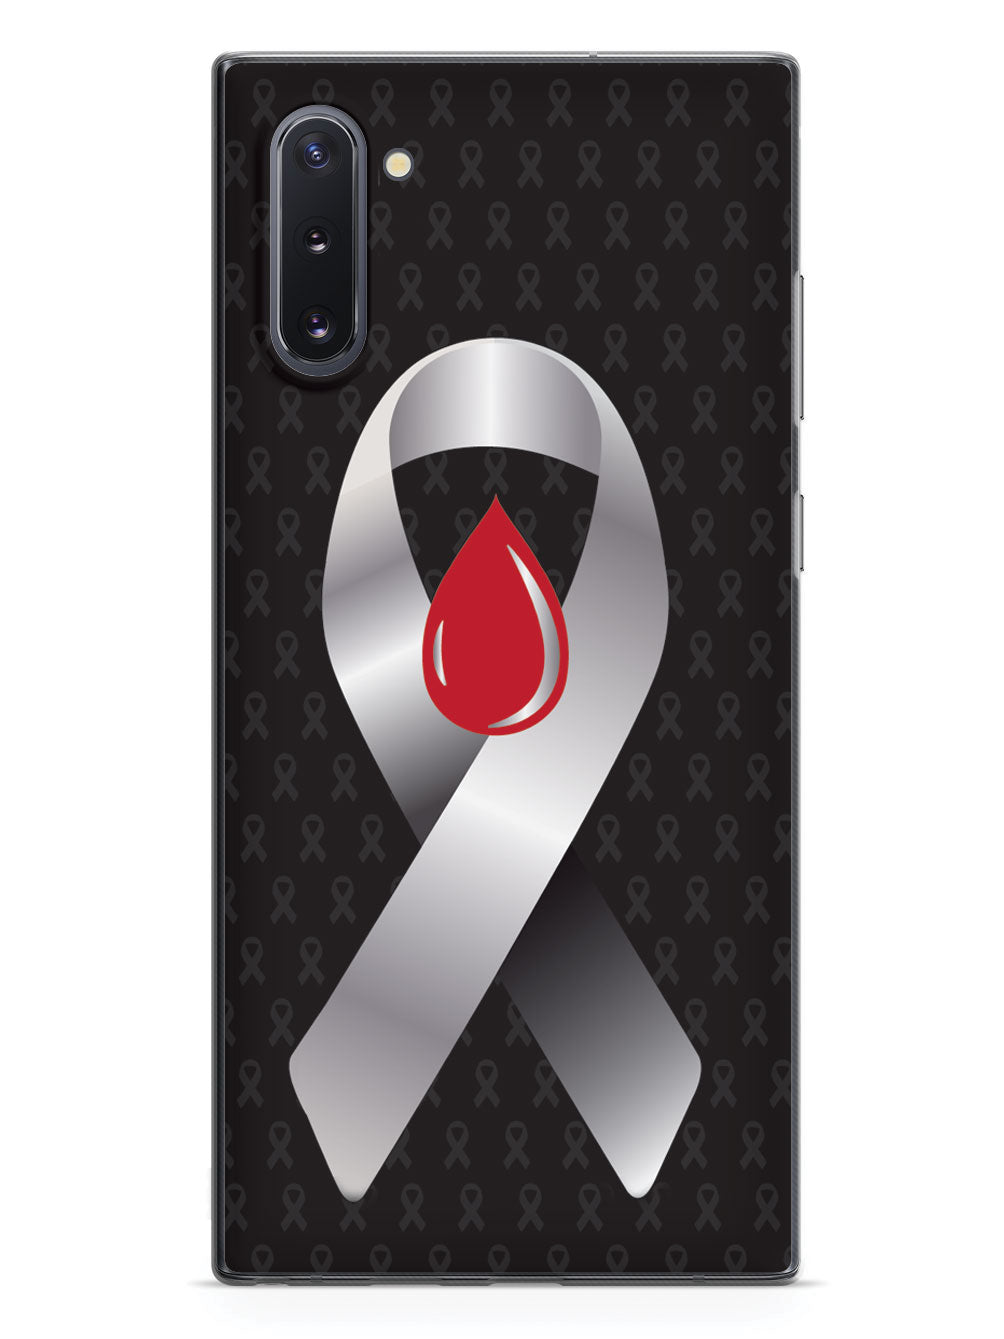 Grey with Blood Drop Awareness Ribbon - Black Case